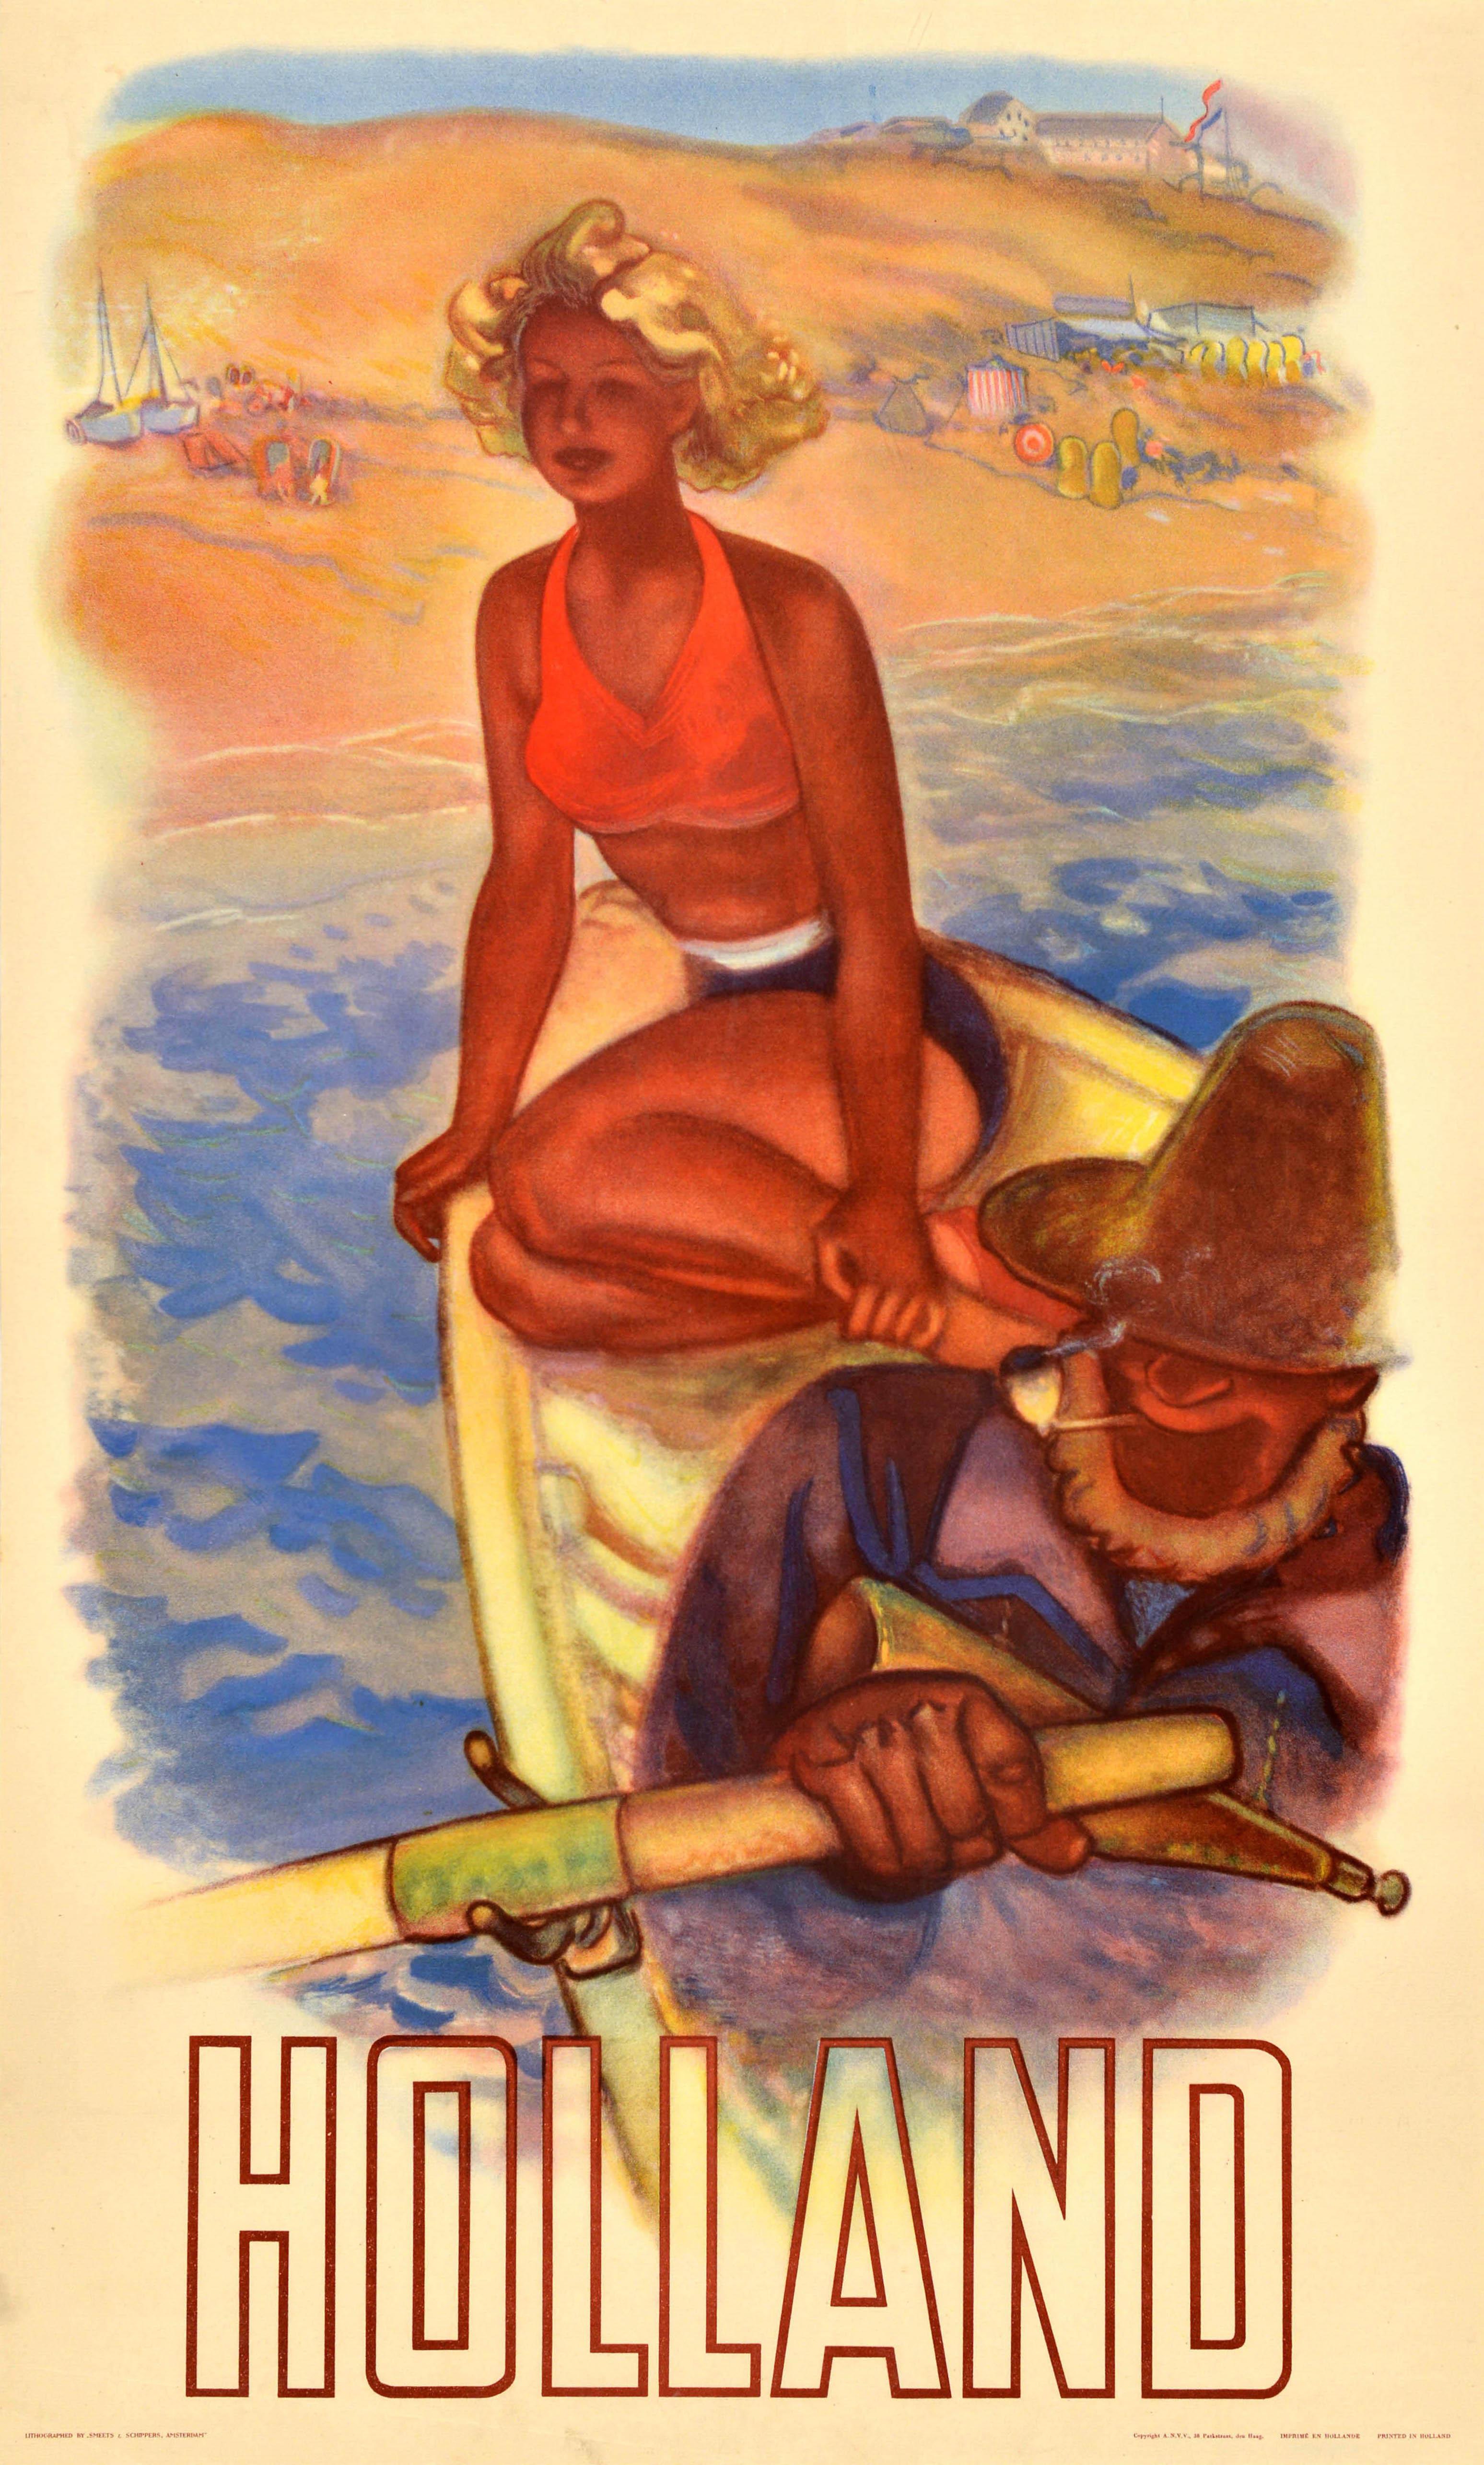 Unknown Print - Original Vintage Travel Poster Holland Beach Fisherman Netherlands Midcentury